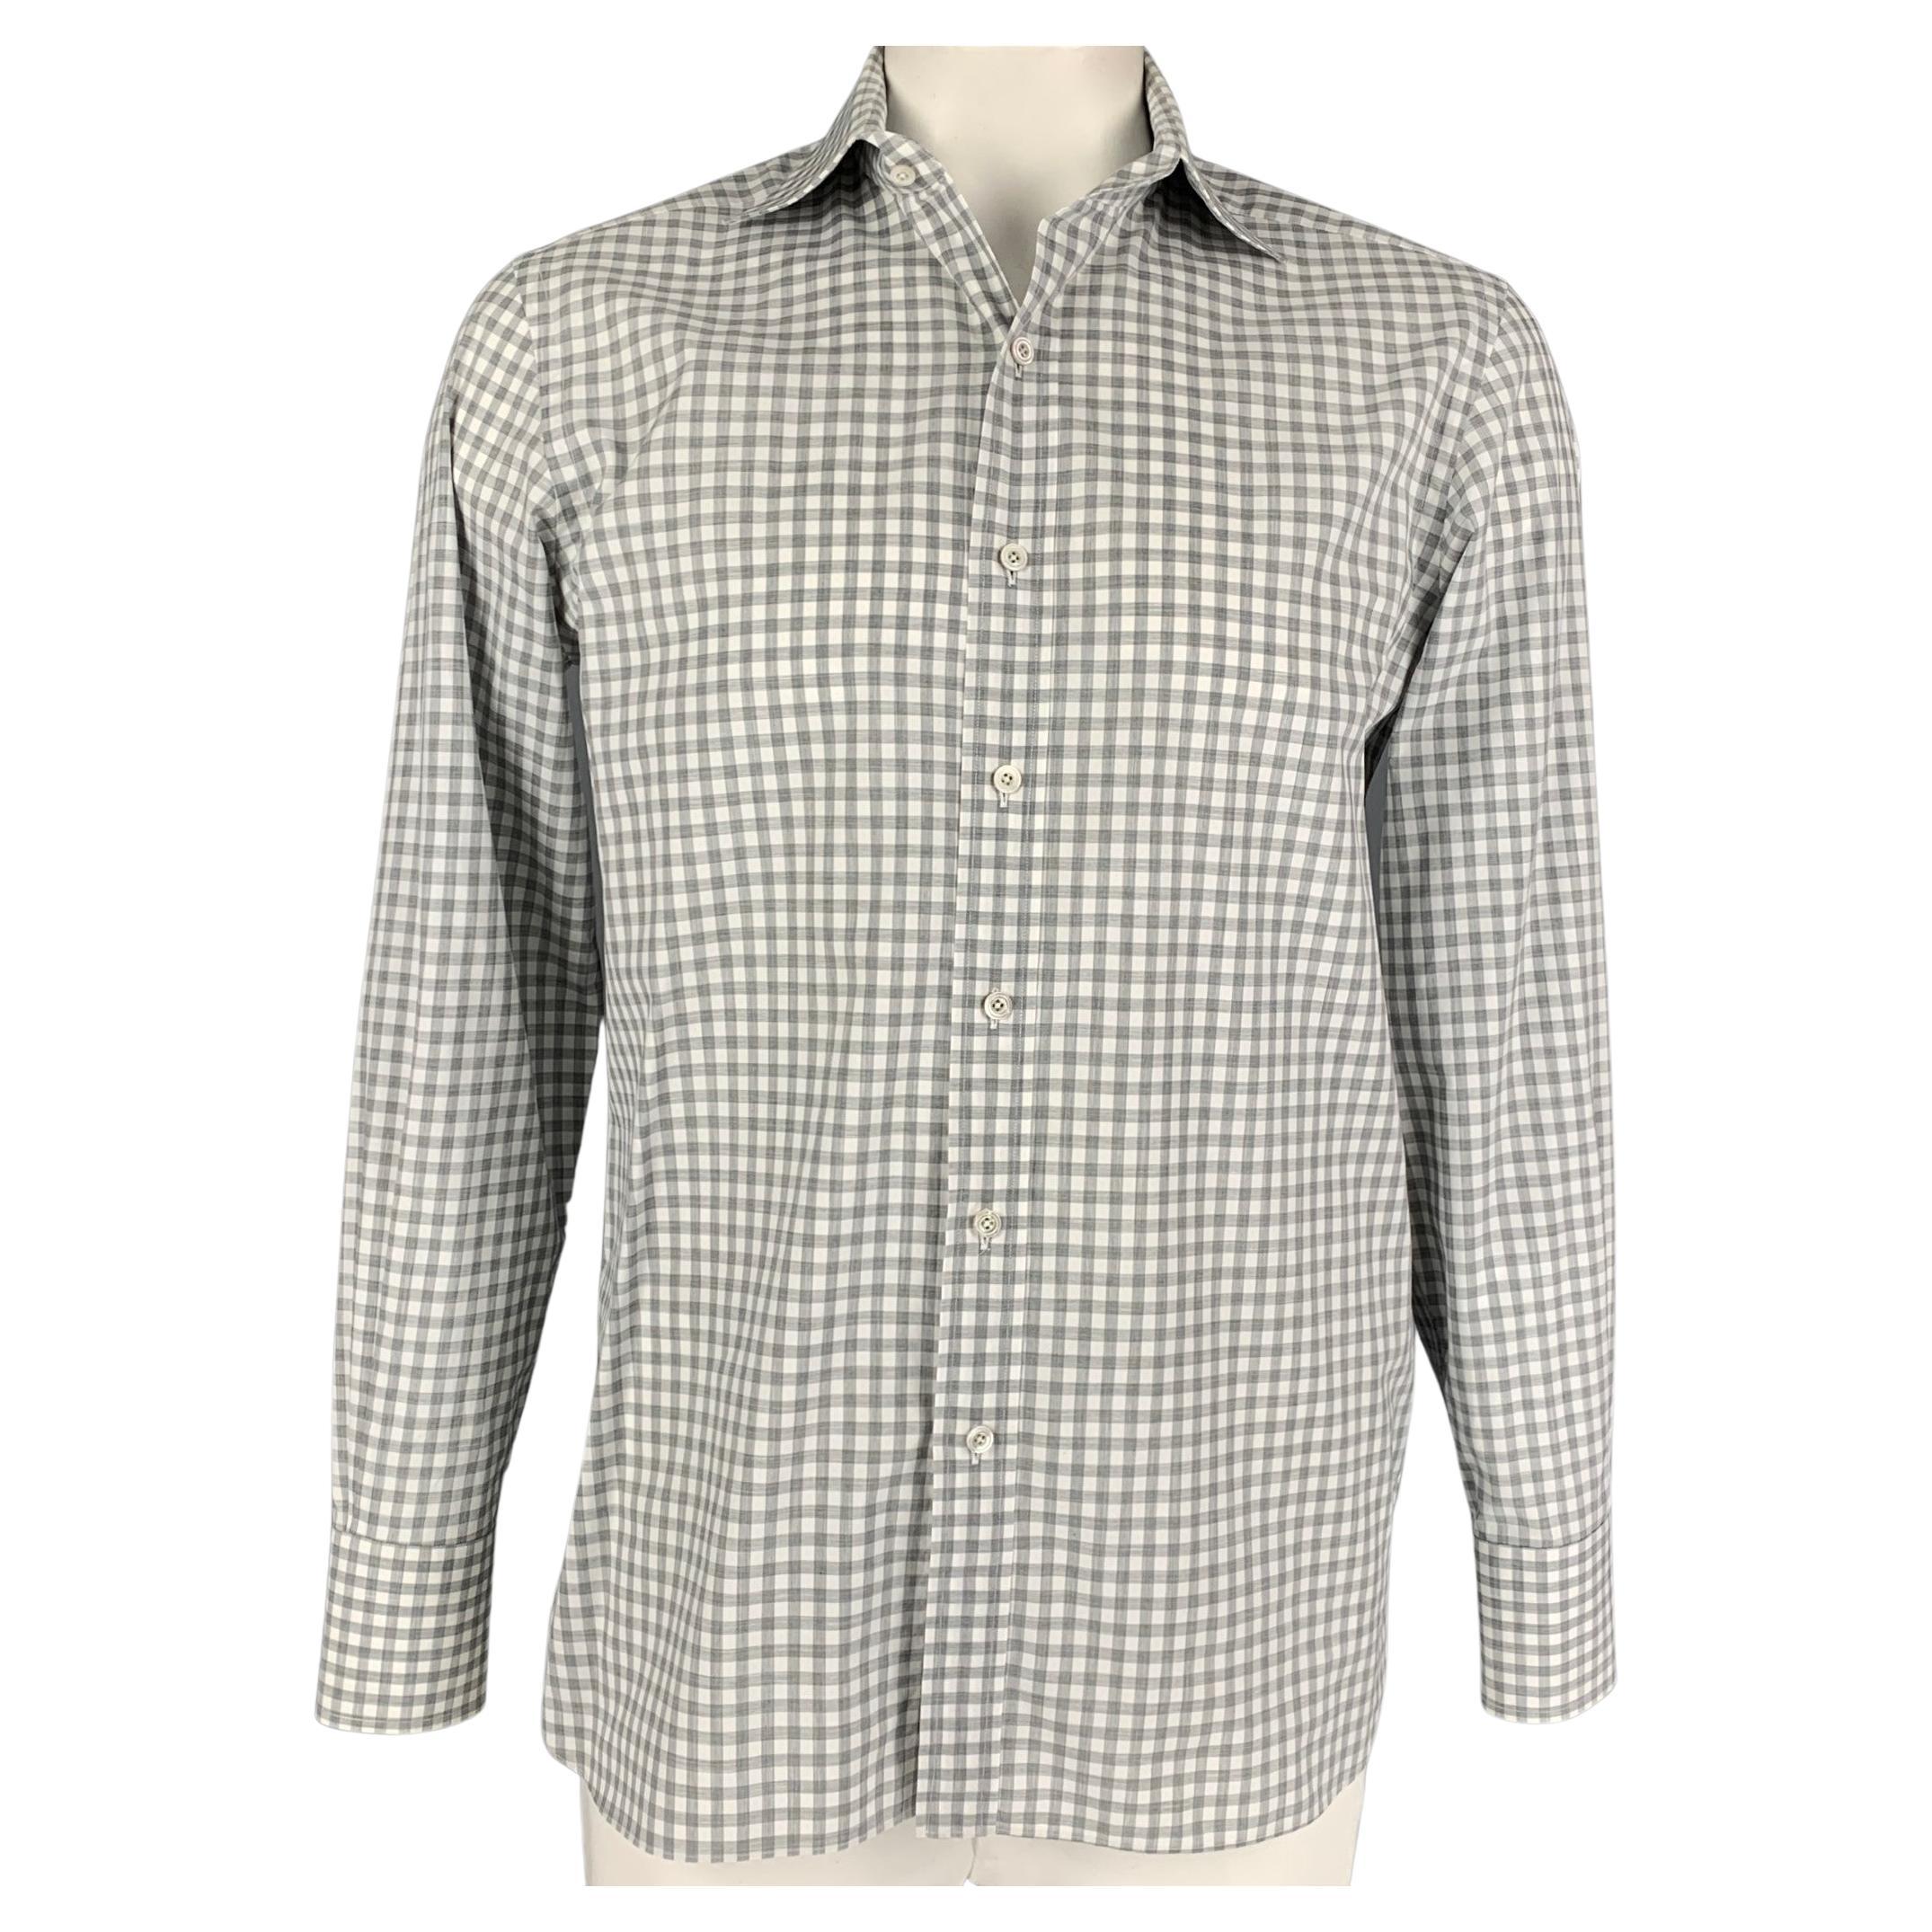 TOM FORD Size L Light Gray White Gingham Cotton Long Sleeve Shirt